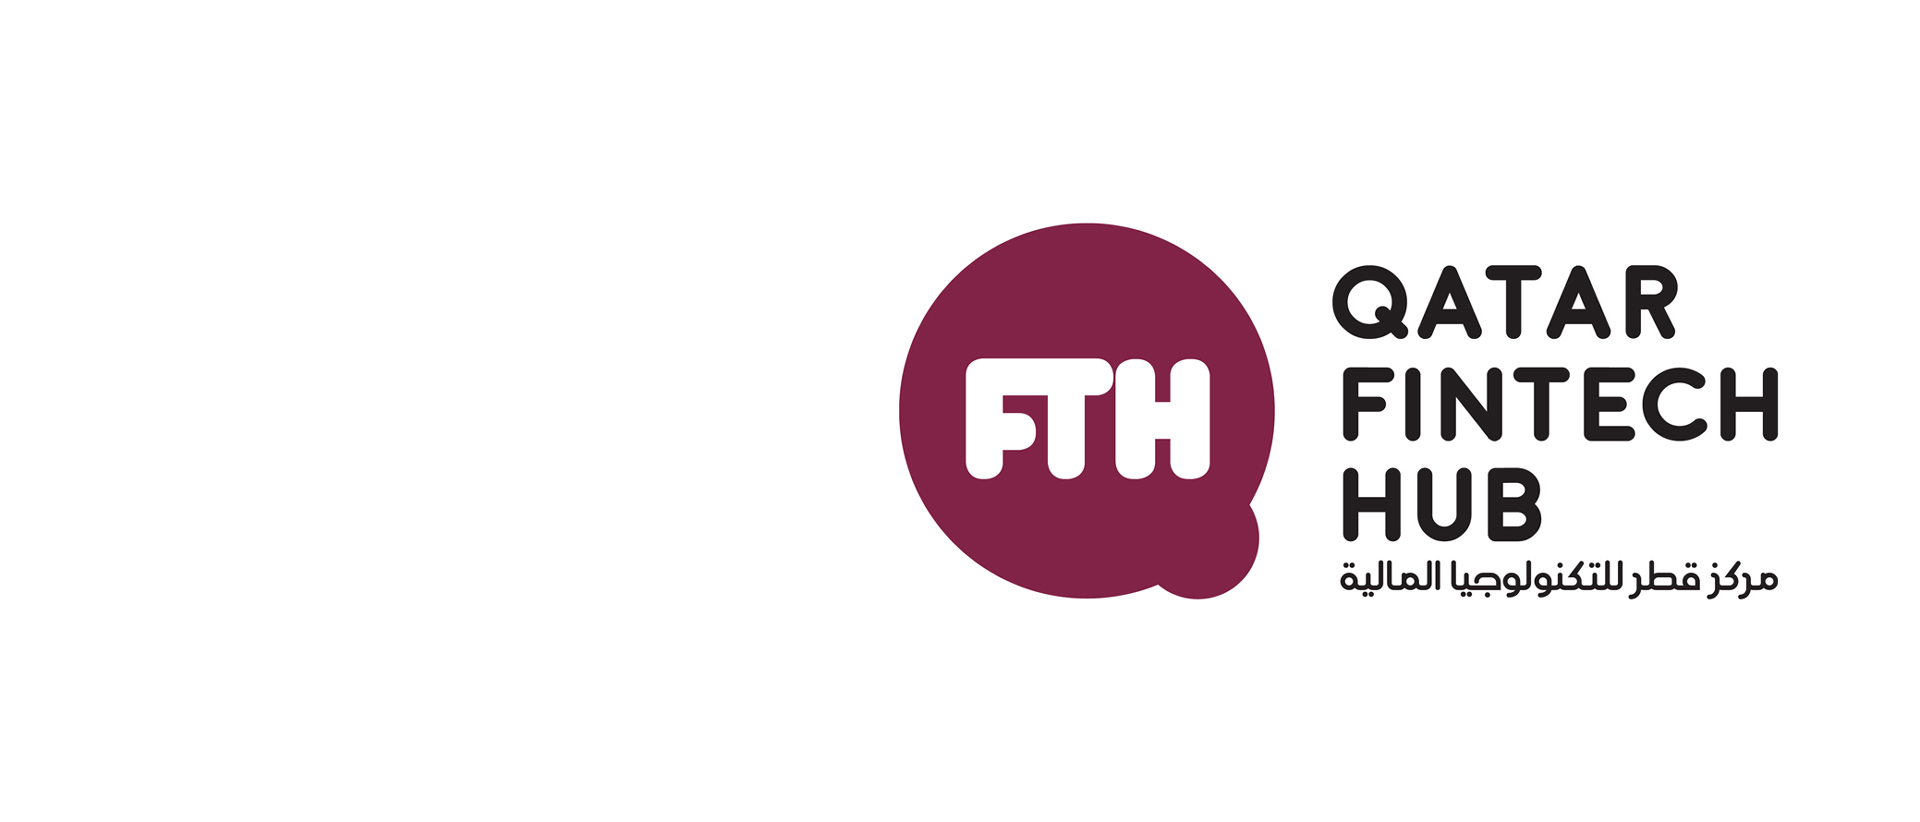 Qatar FinTech Hub Hosts Second Hackathon to  Support Innovative Ideas